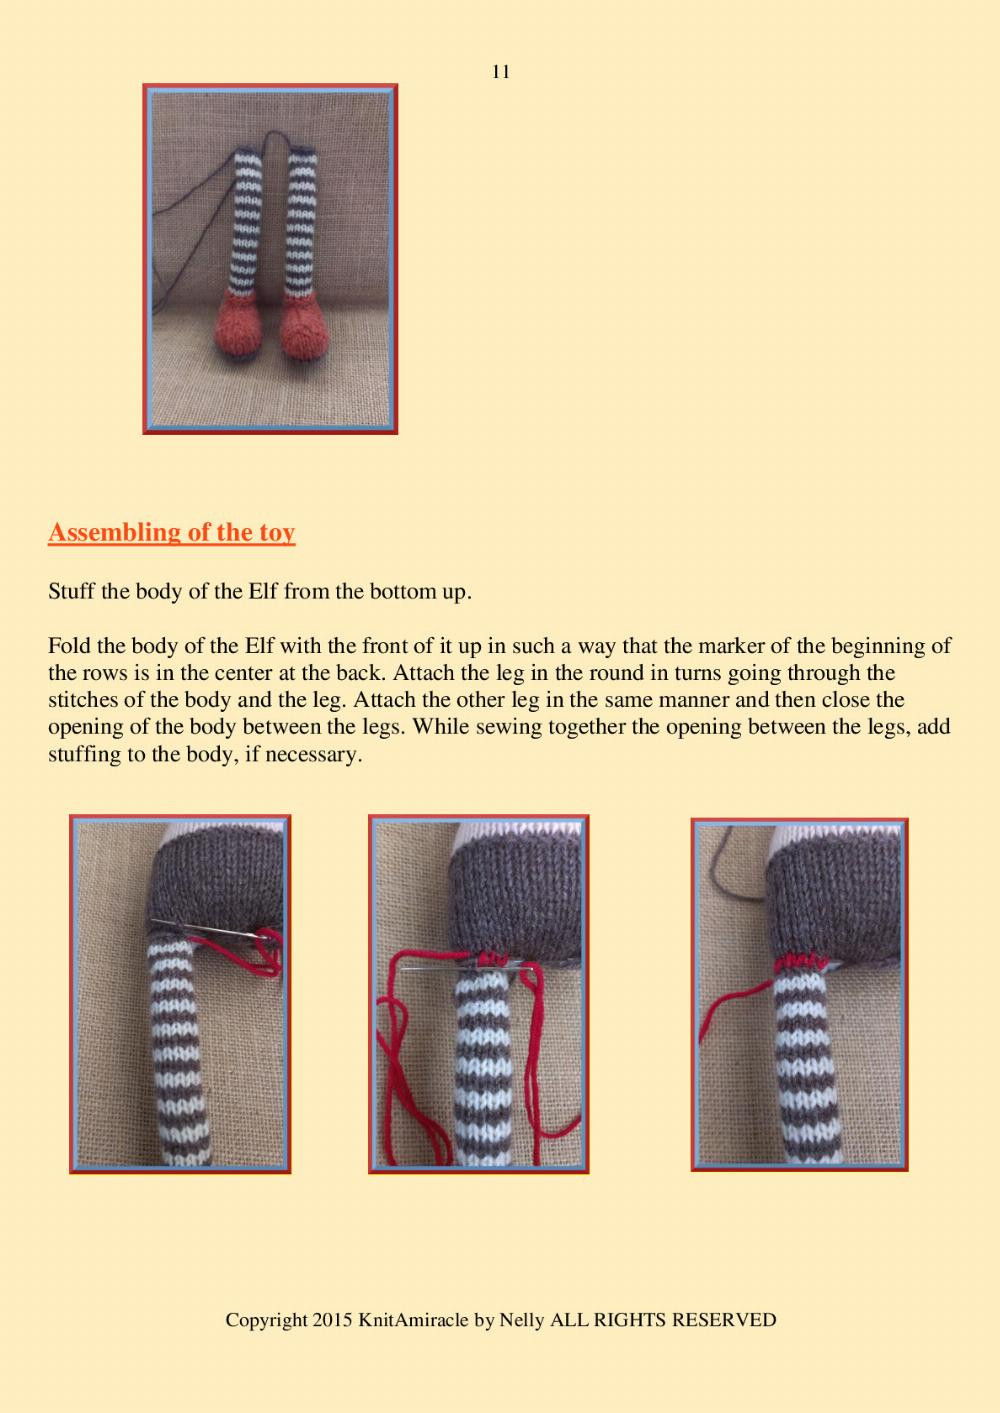 miracle crochet pattern